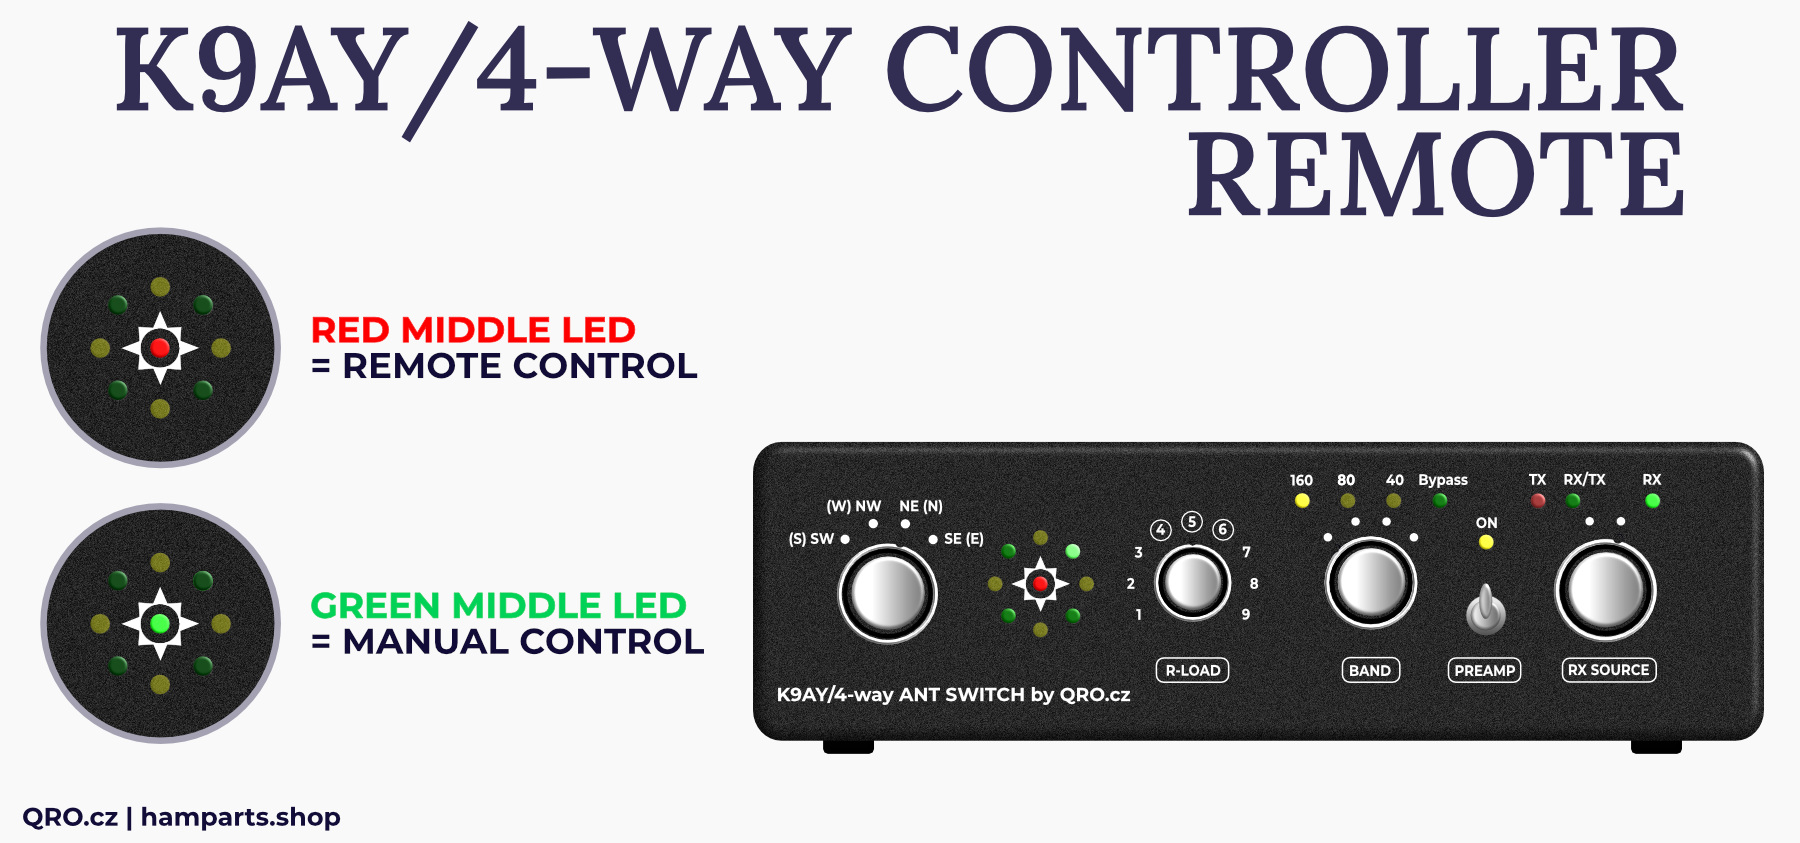 k9ay/4-way antenna switch controller led description remote qro.cz hamparts.shop